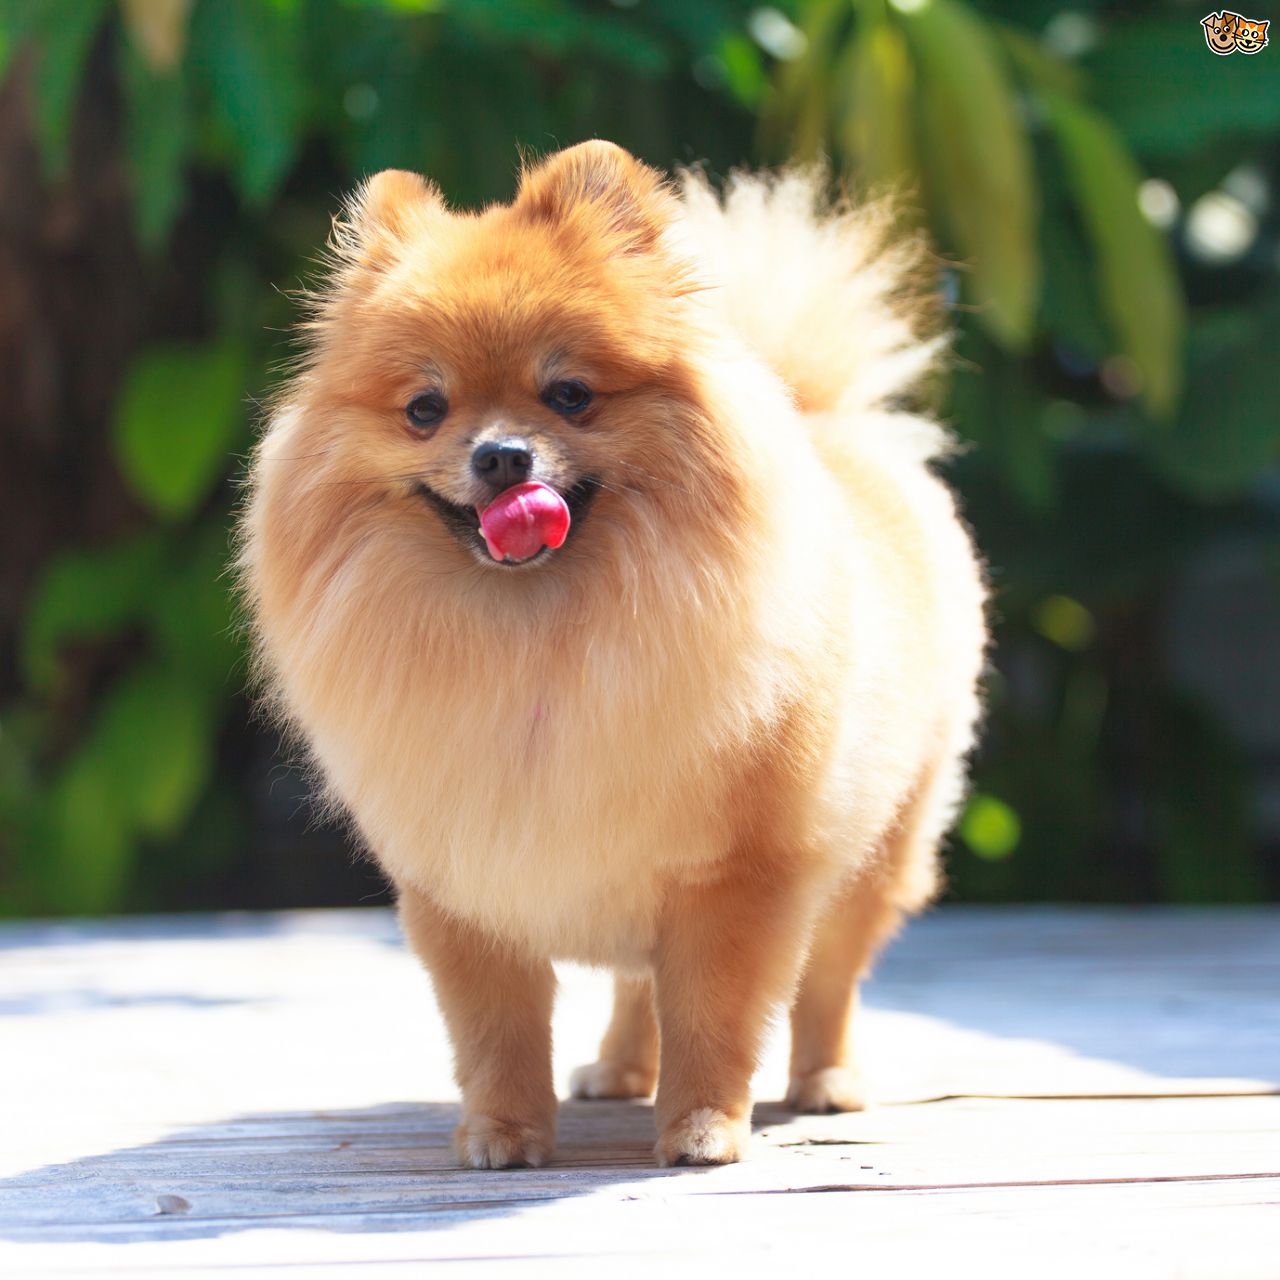 Cute Pomeranian Dog Picture